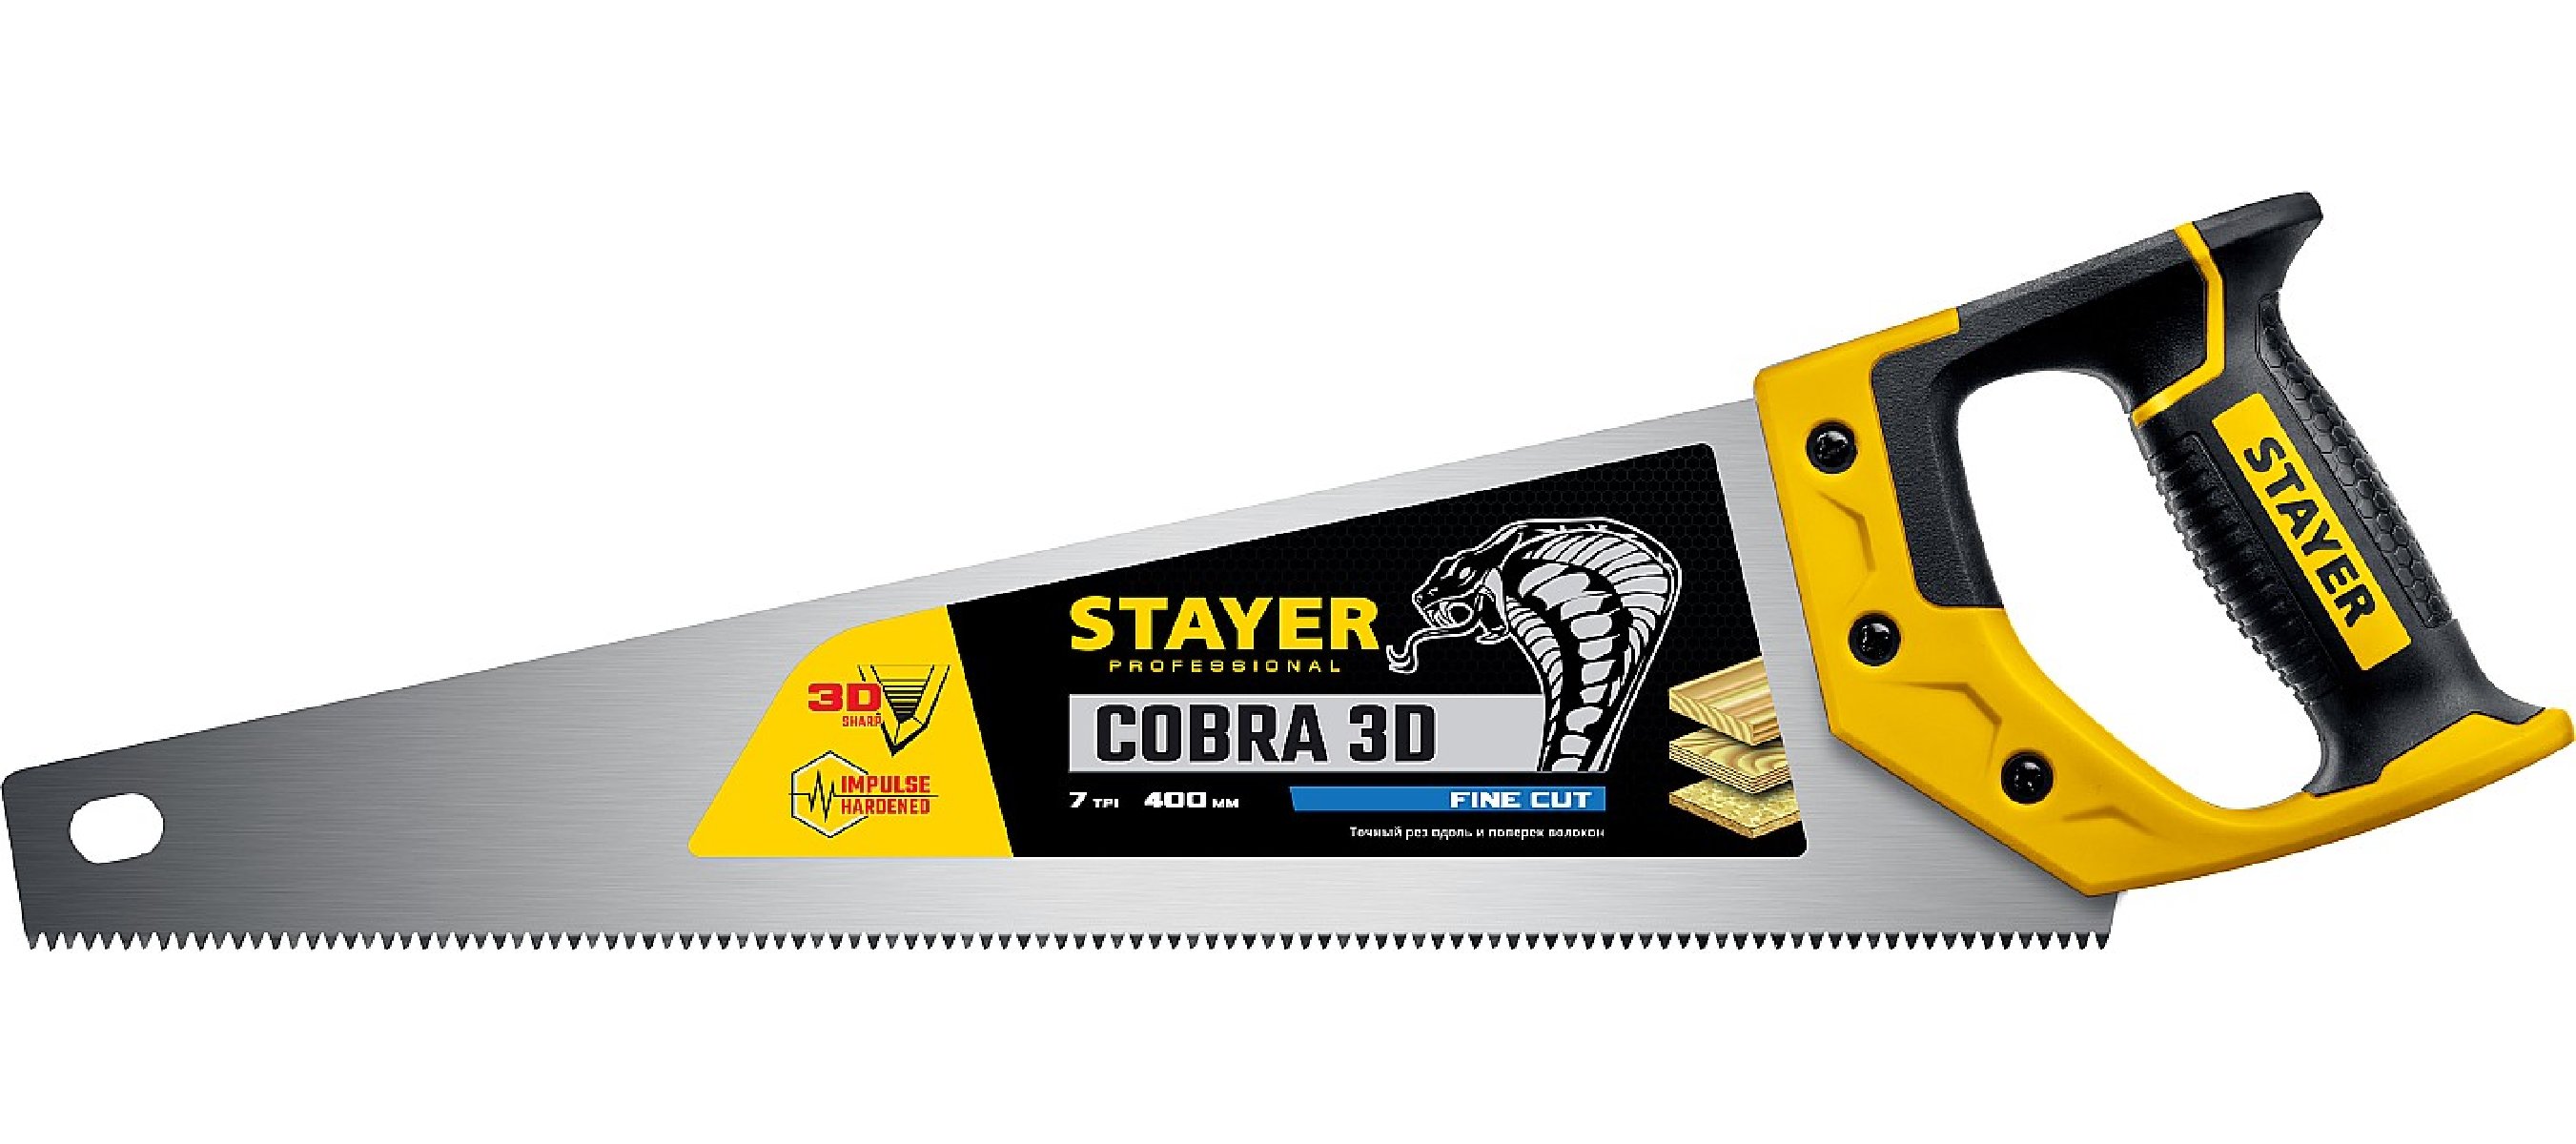   STAYER Cobra 3D 400  (1512-40_z01)